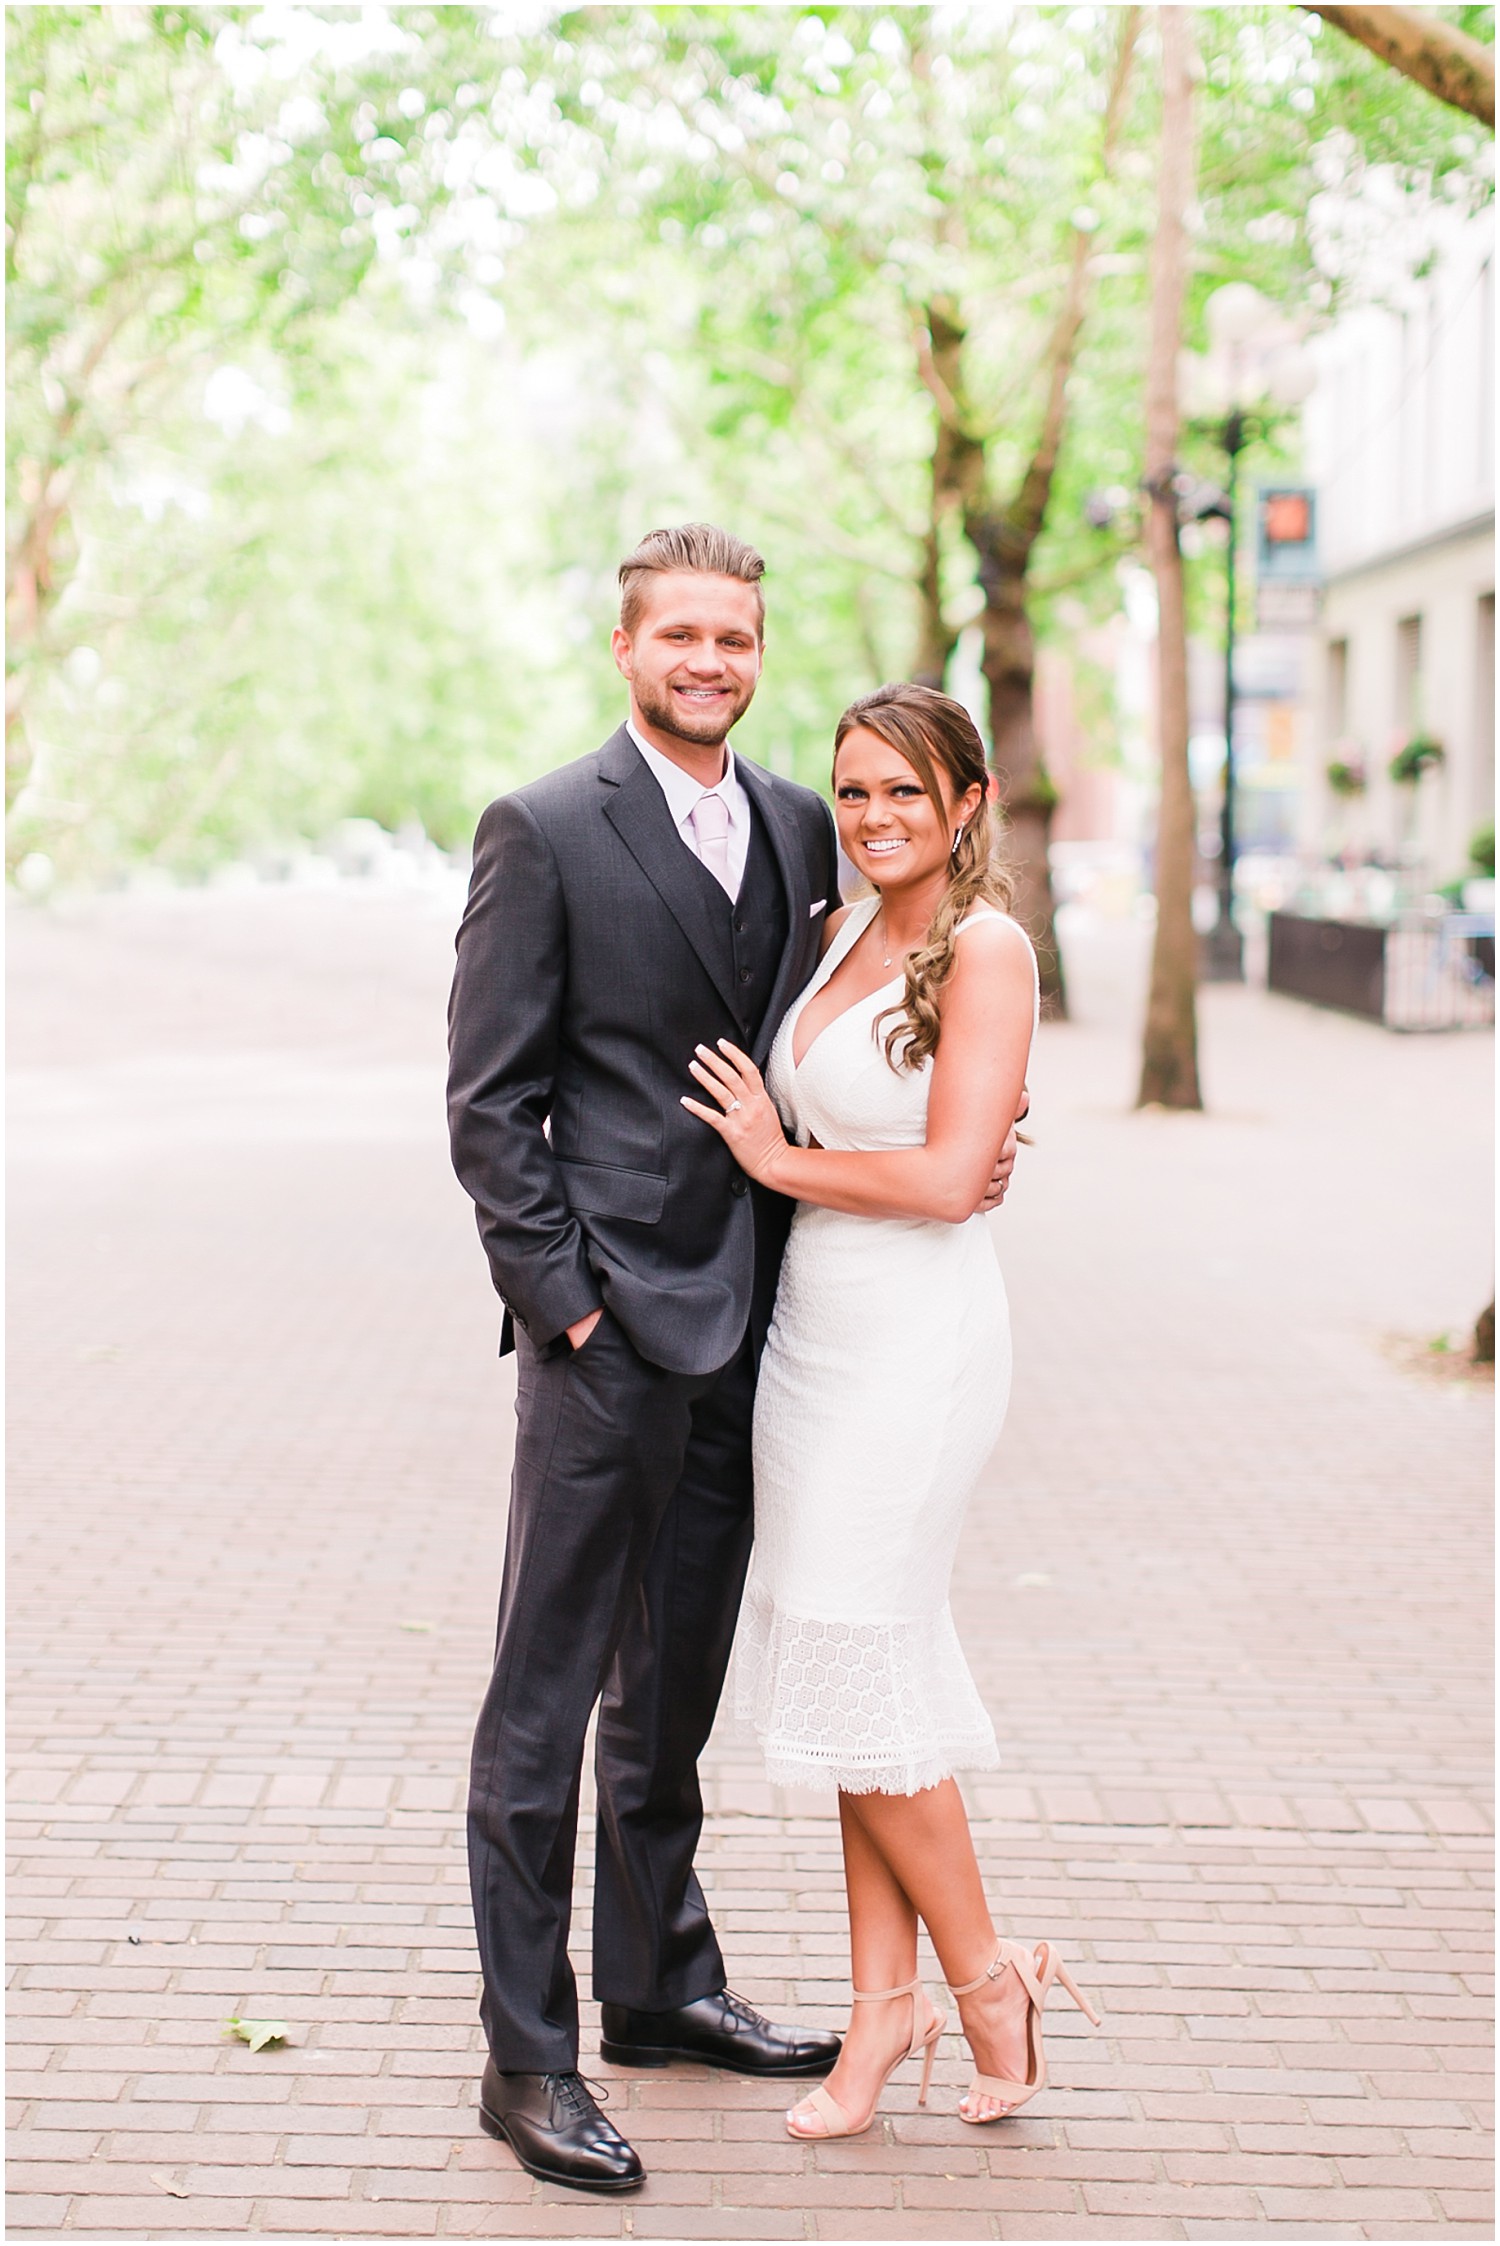 Seattle Courthouse Intimate Wedding | Bartosz & Kathryn